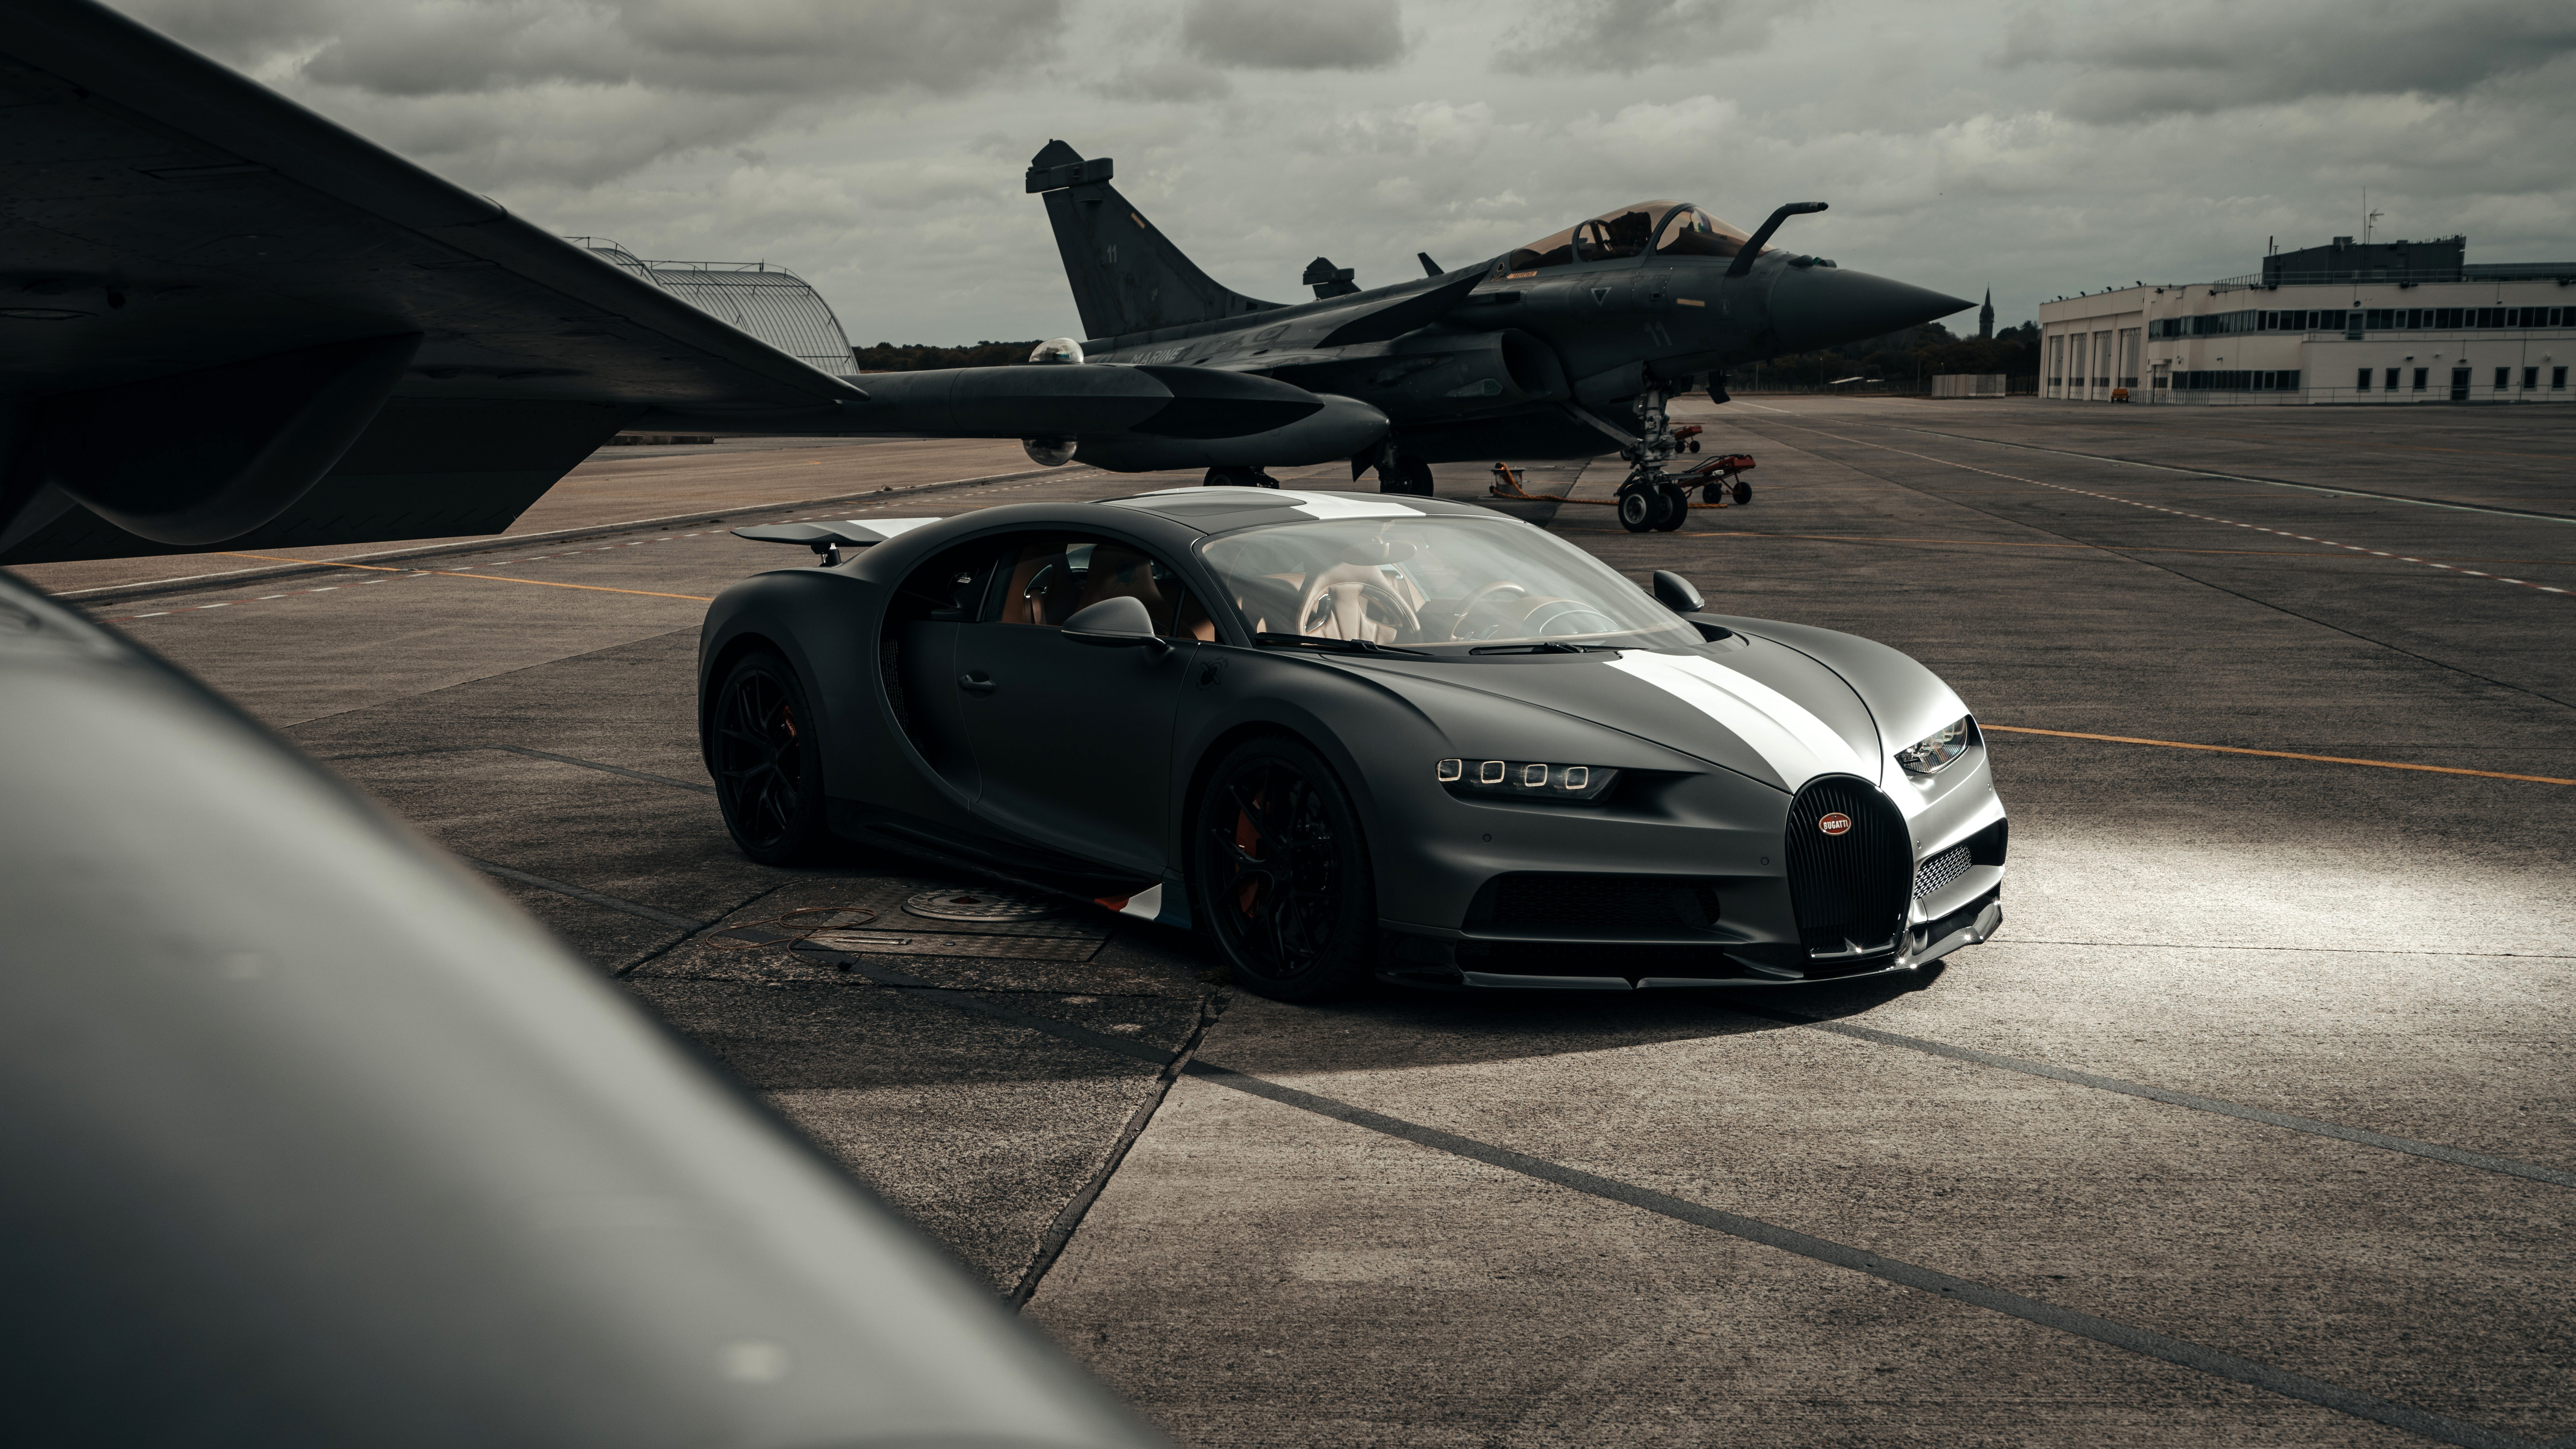 HD desktop wallpaper Bugatti Car Supercar Jet Fighter Bugatti Chiron  Vehicles Black Car download free picture 500943